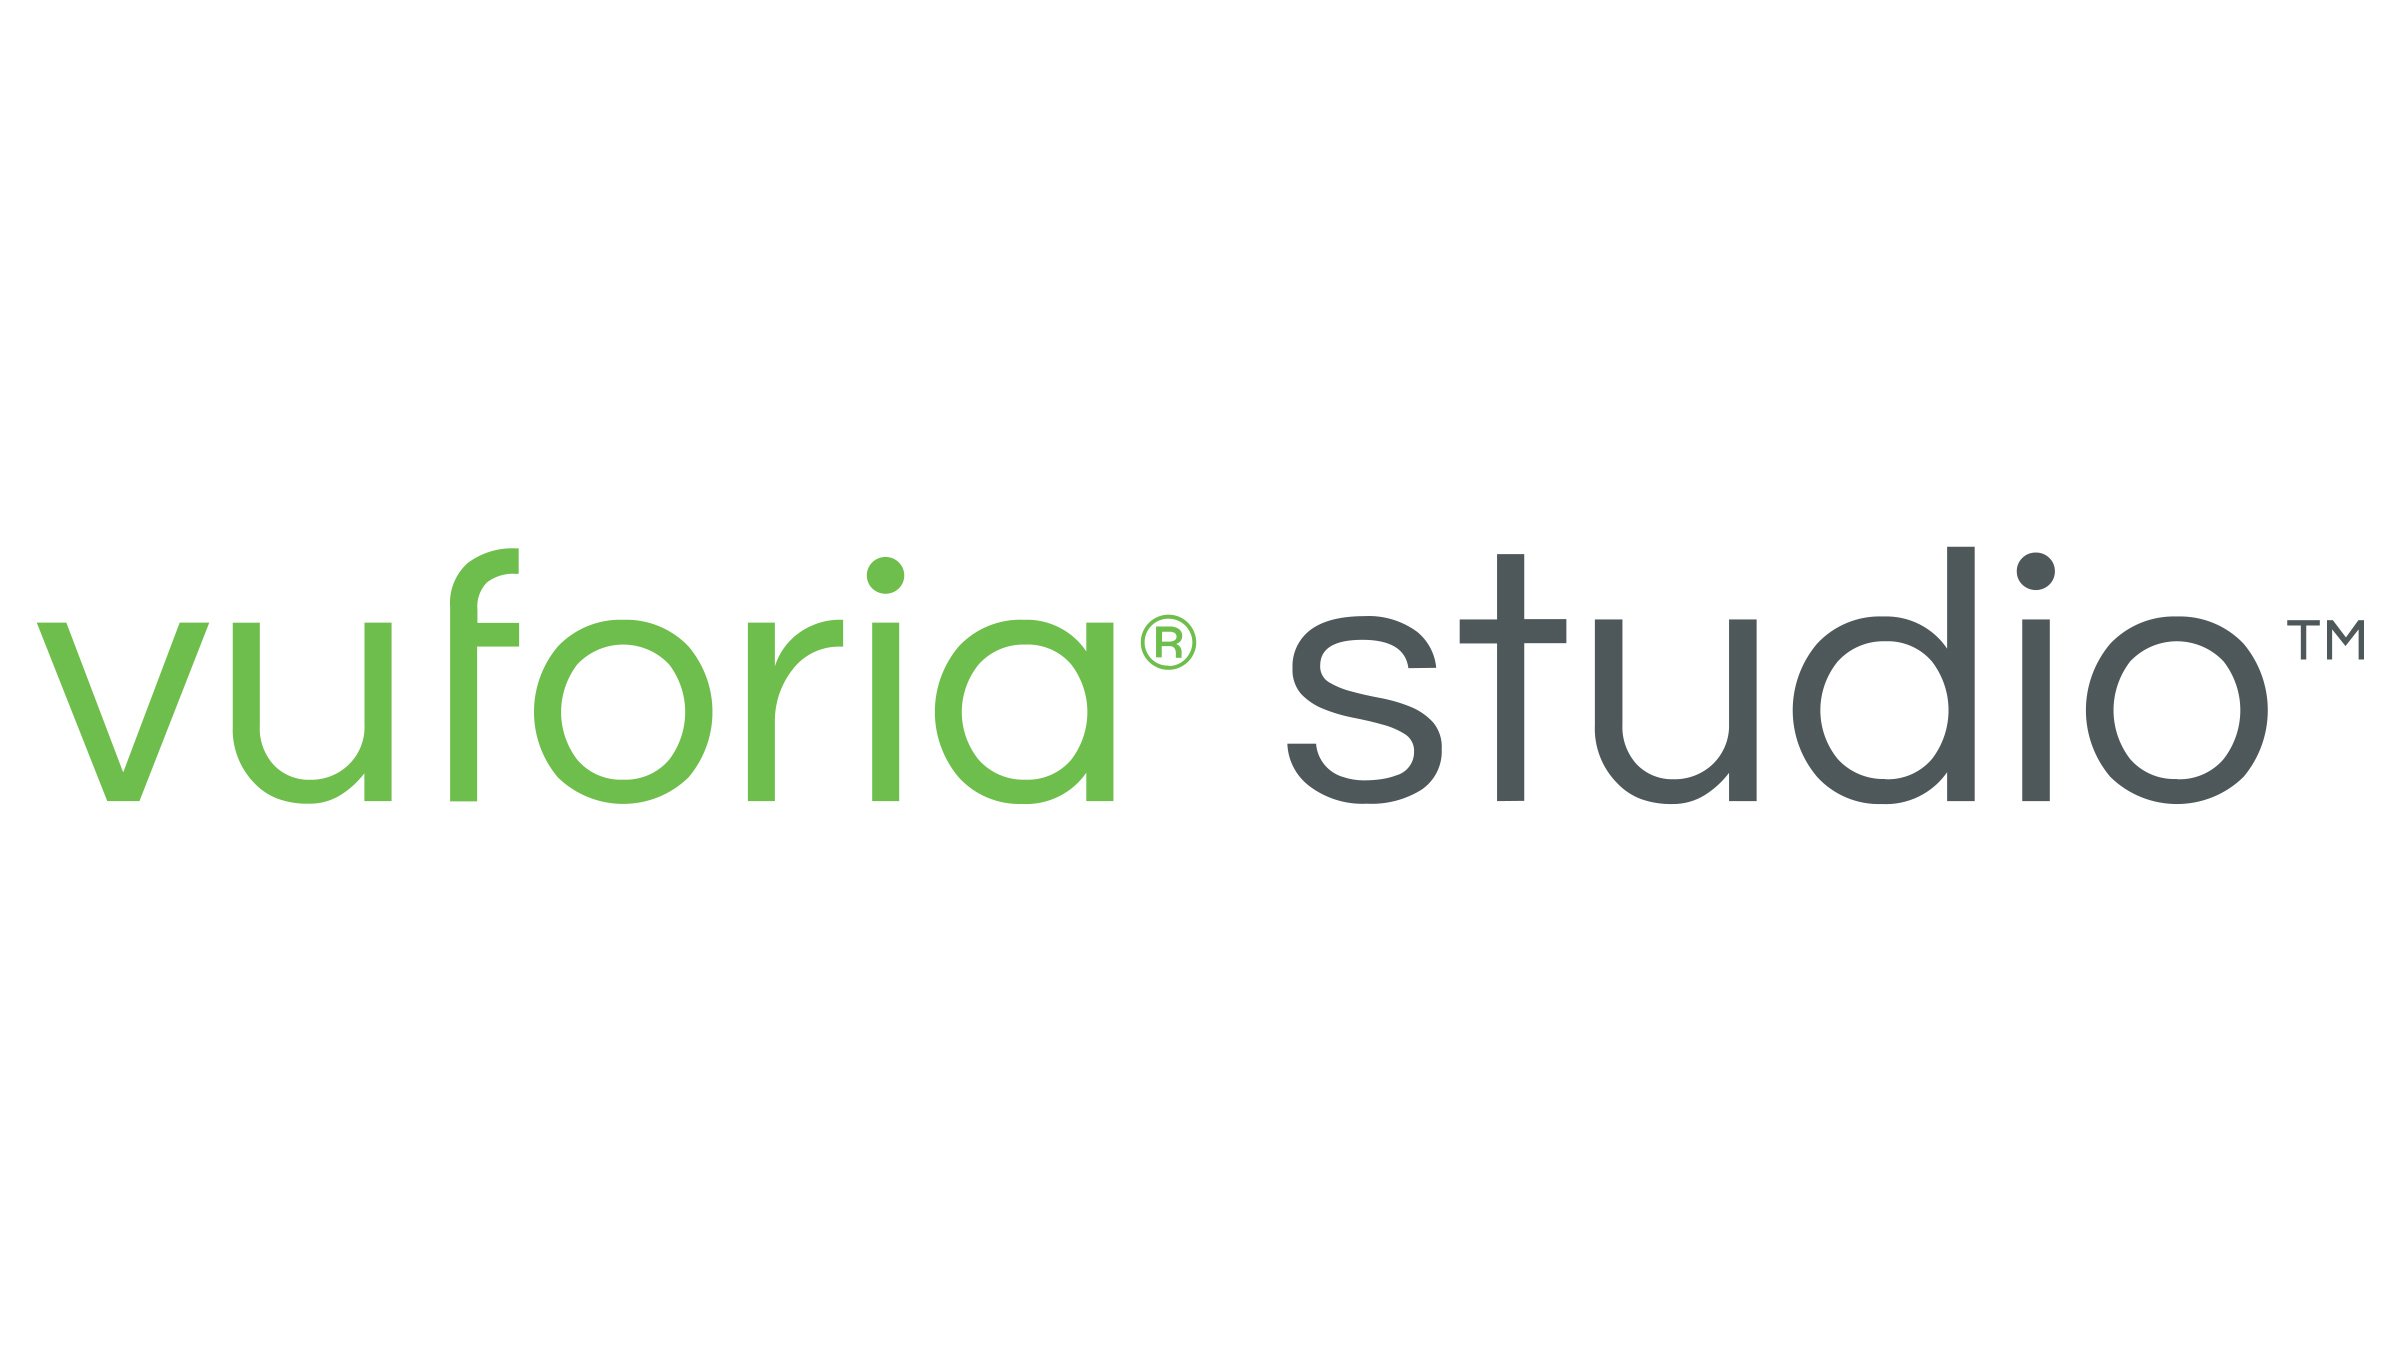 Logotipo verde y gris de PTC Vuforia Studio